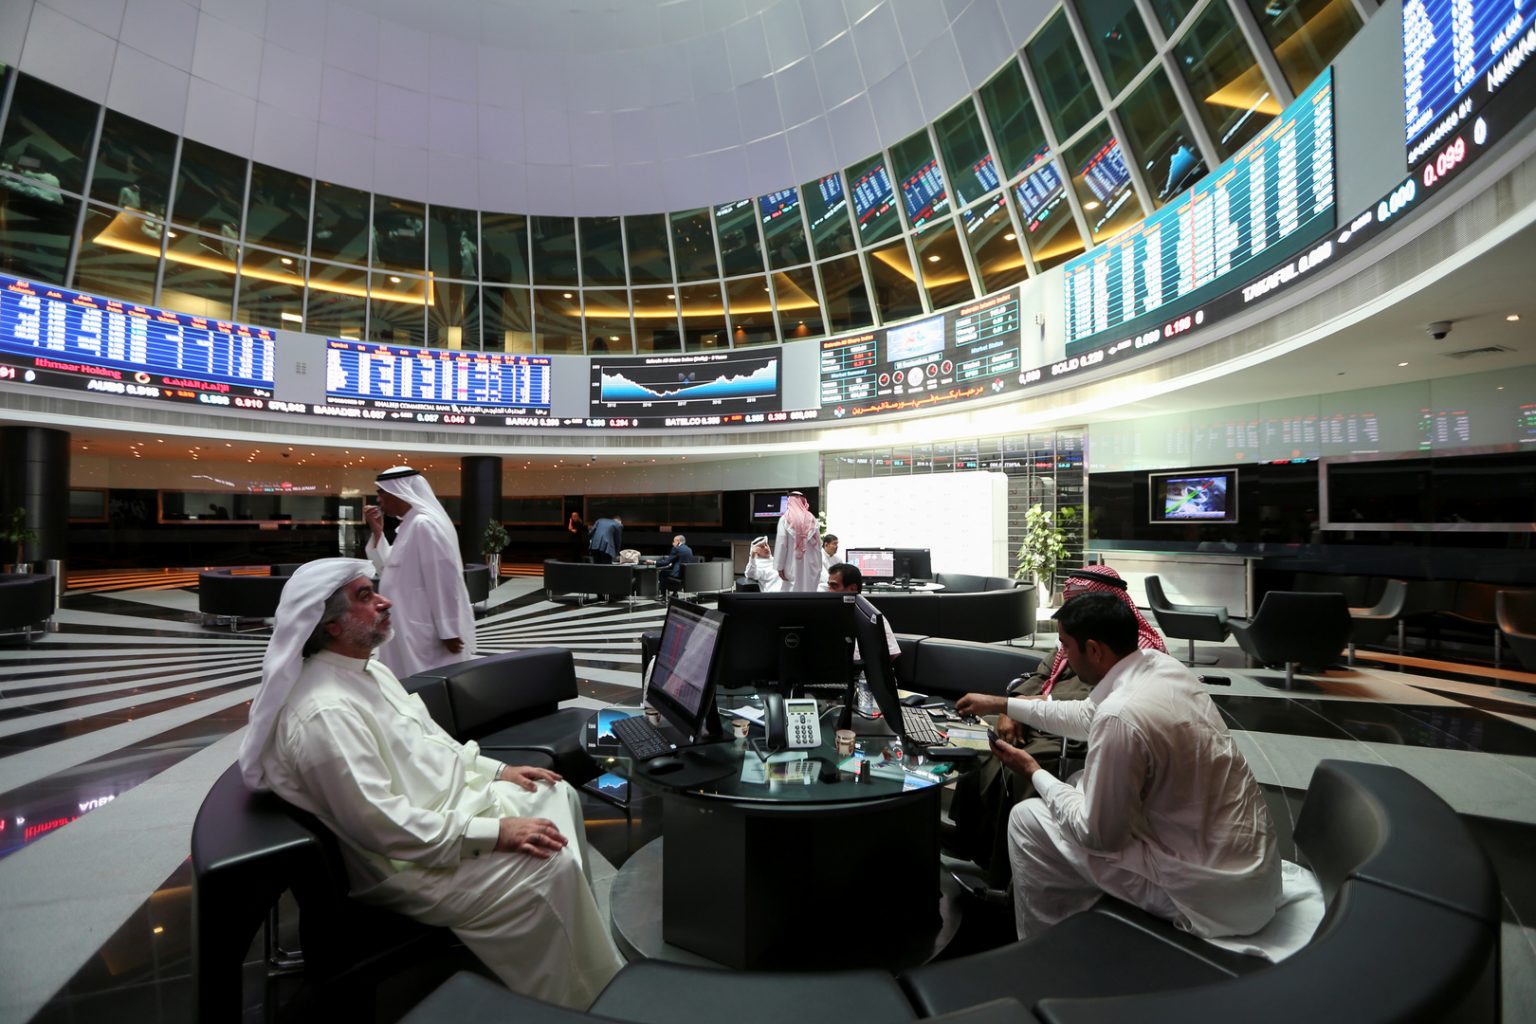 Gulf markets